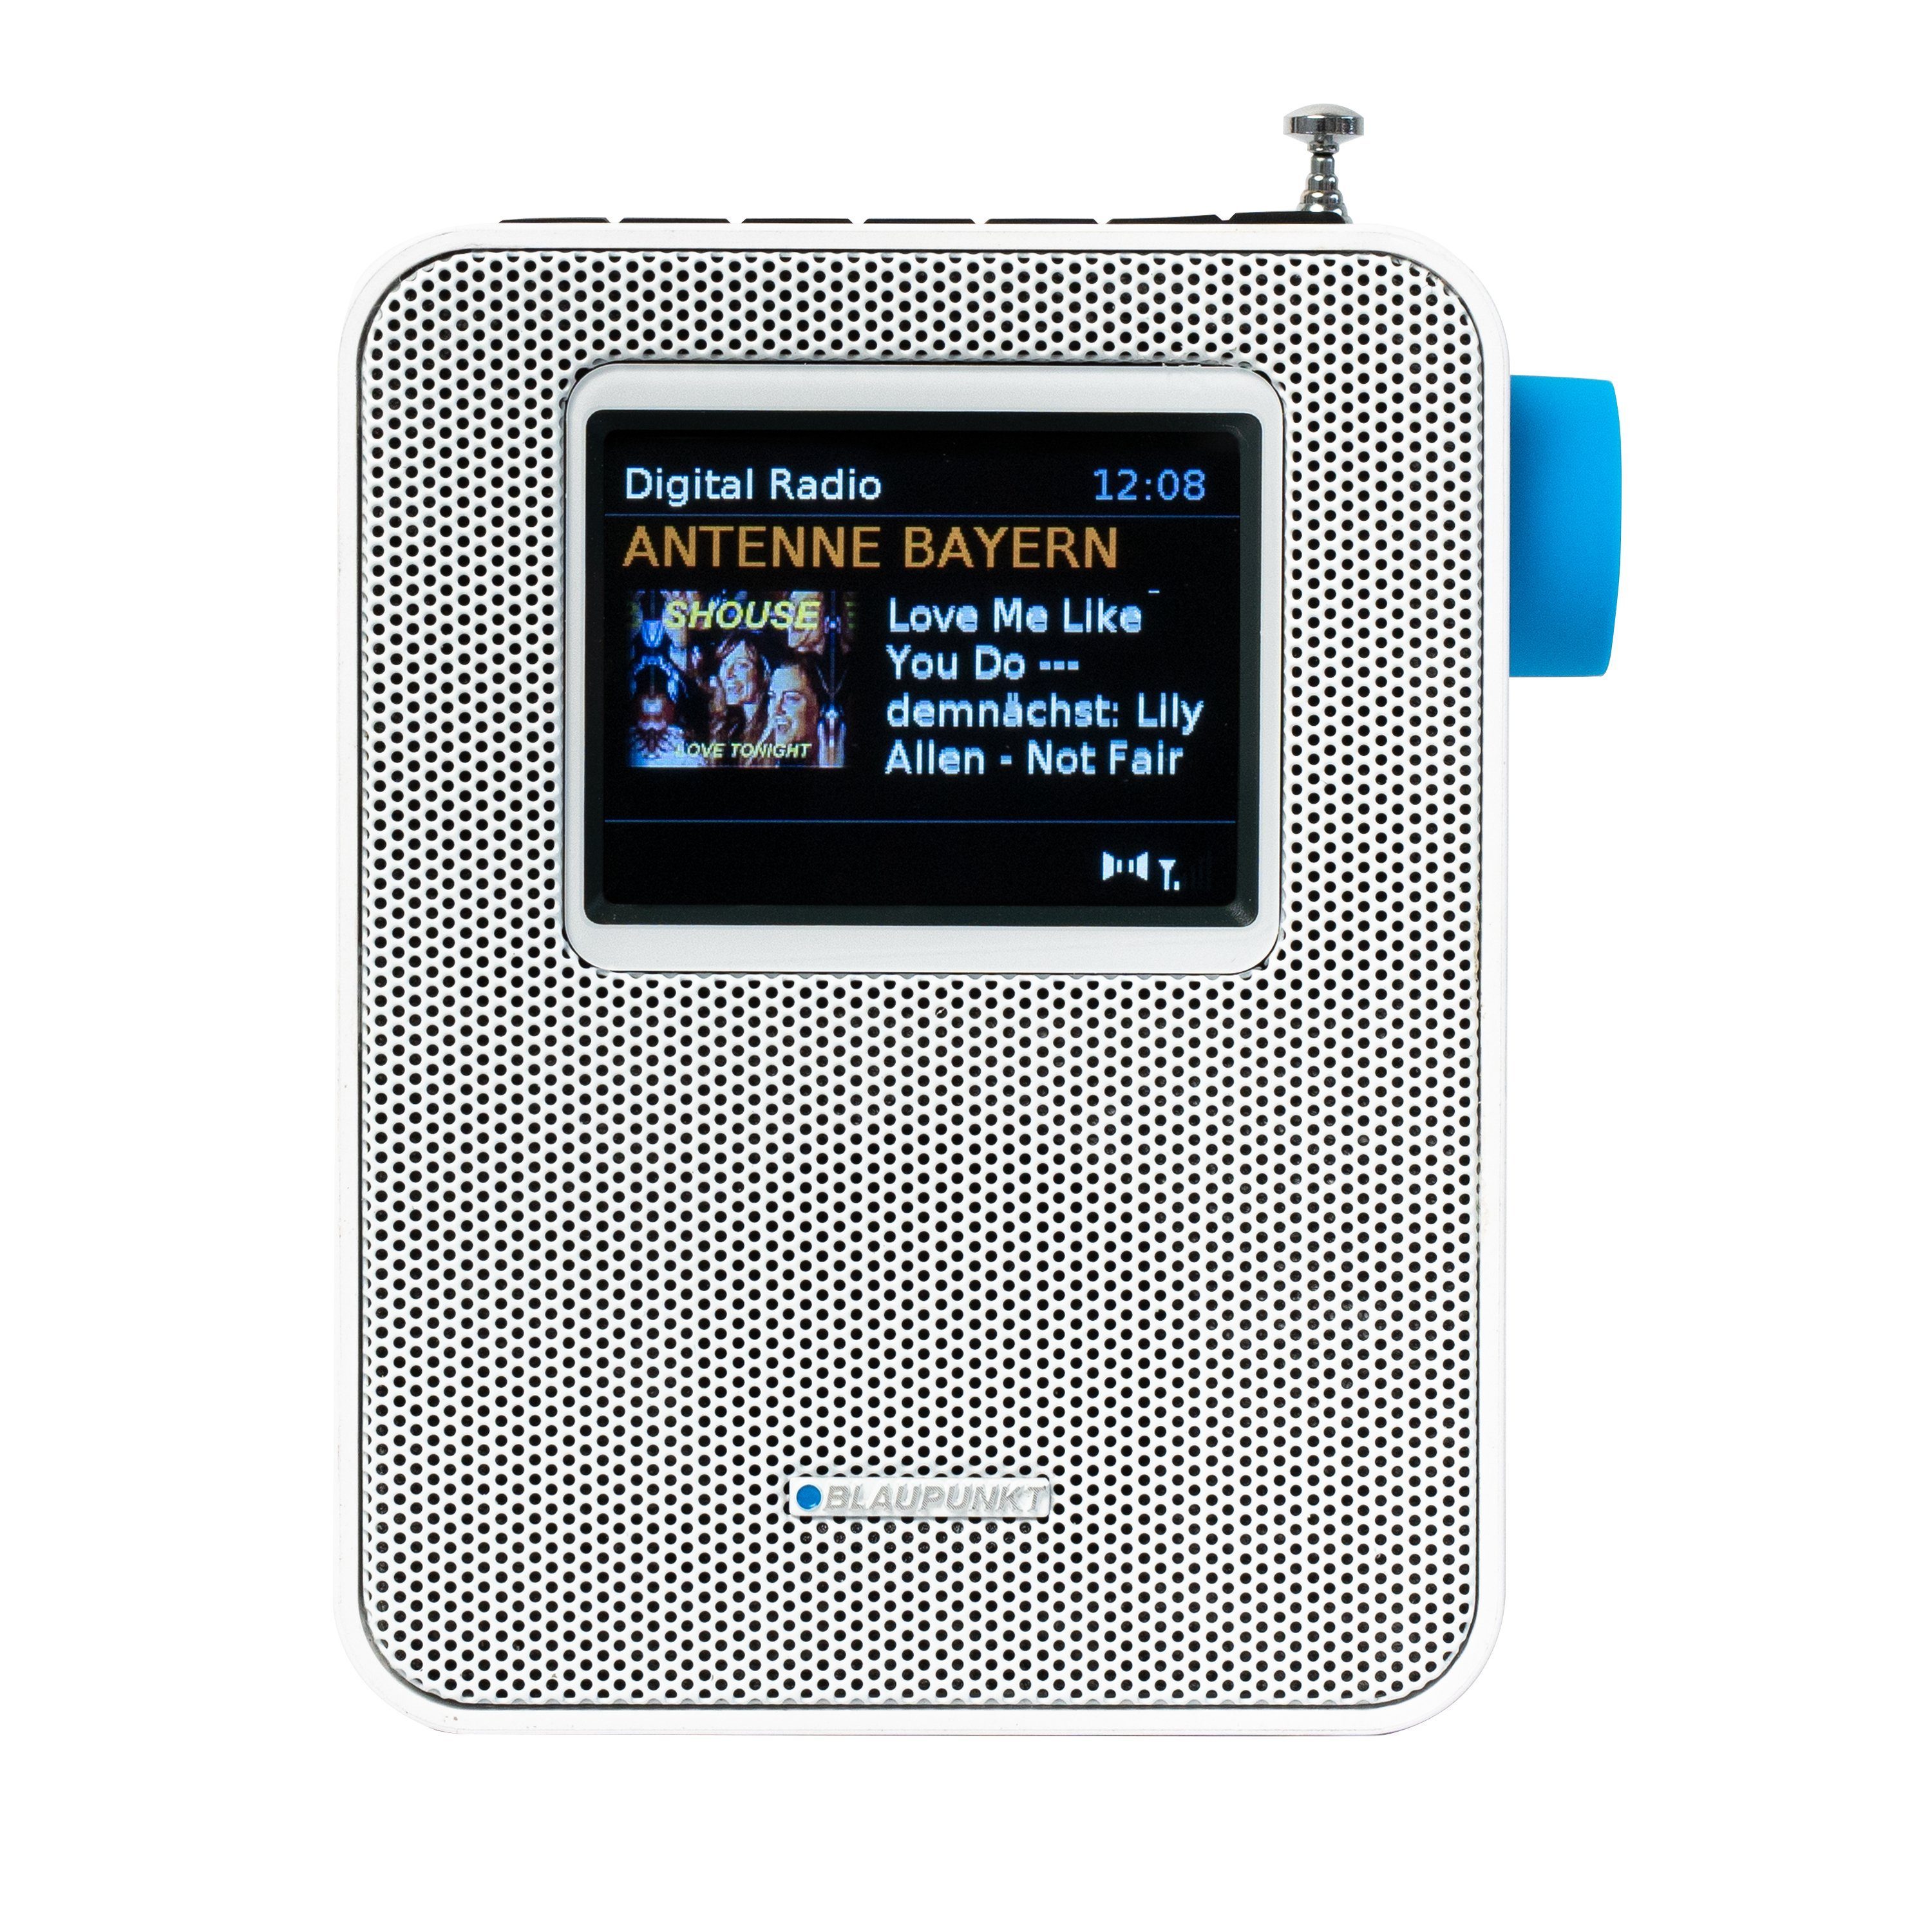 Blaupunkt (DAB) Bluetooth, PDB UKW, (Digitalradio DAB+ Digitalradio 3,00 W) mit 200 Steckdosenradio (DAB), und